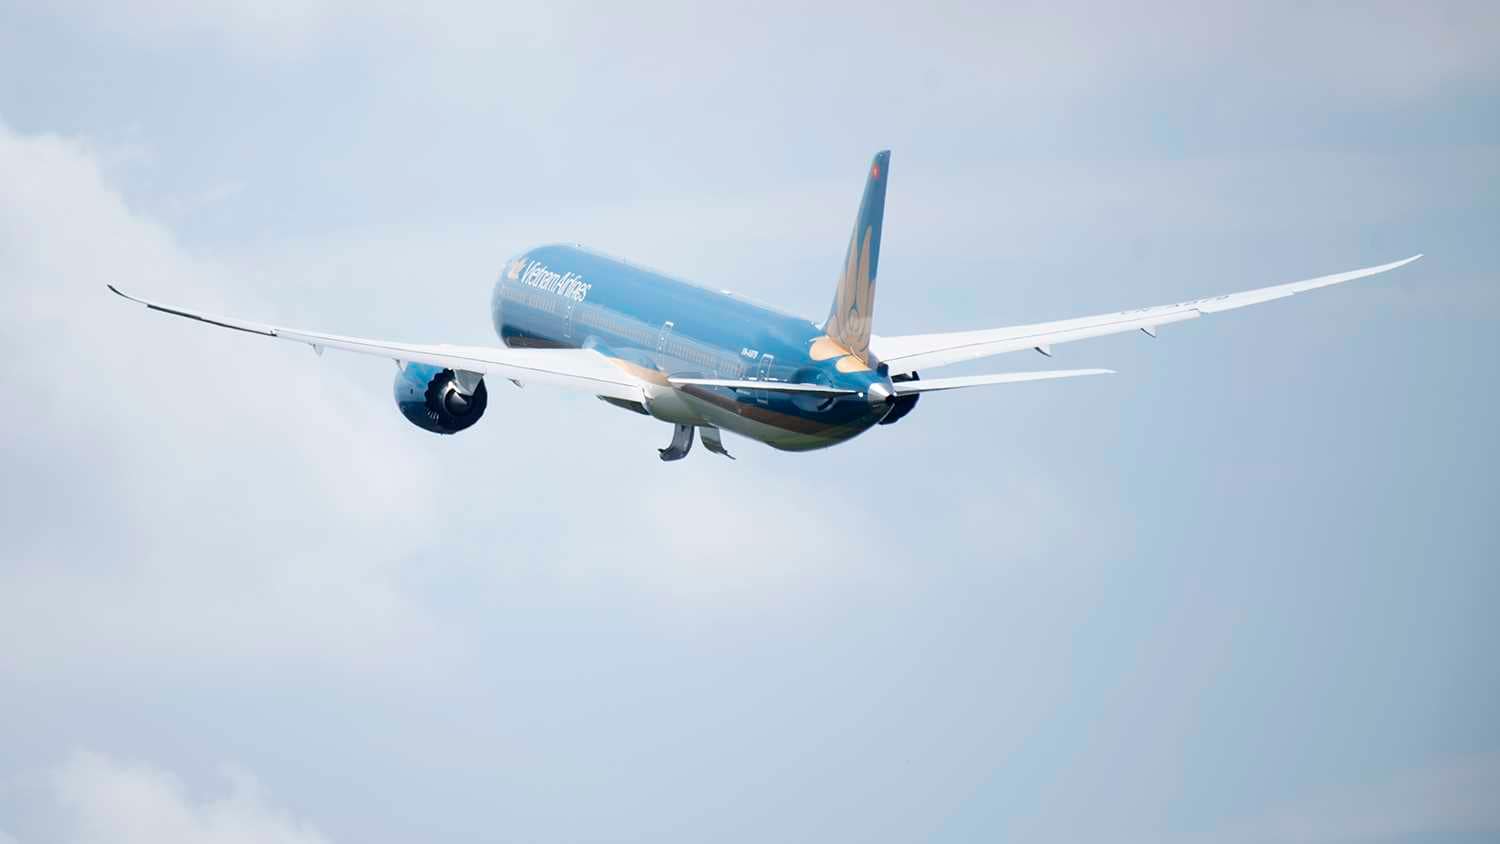 Vietnam Airlines facilitates approximately 20 flights per week along the Kuala Lumpur (KUL) to Tokyo (NRT) route